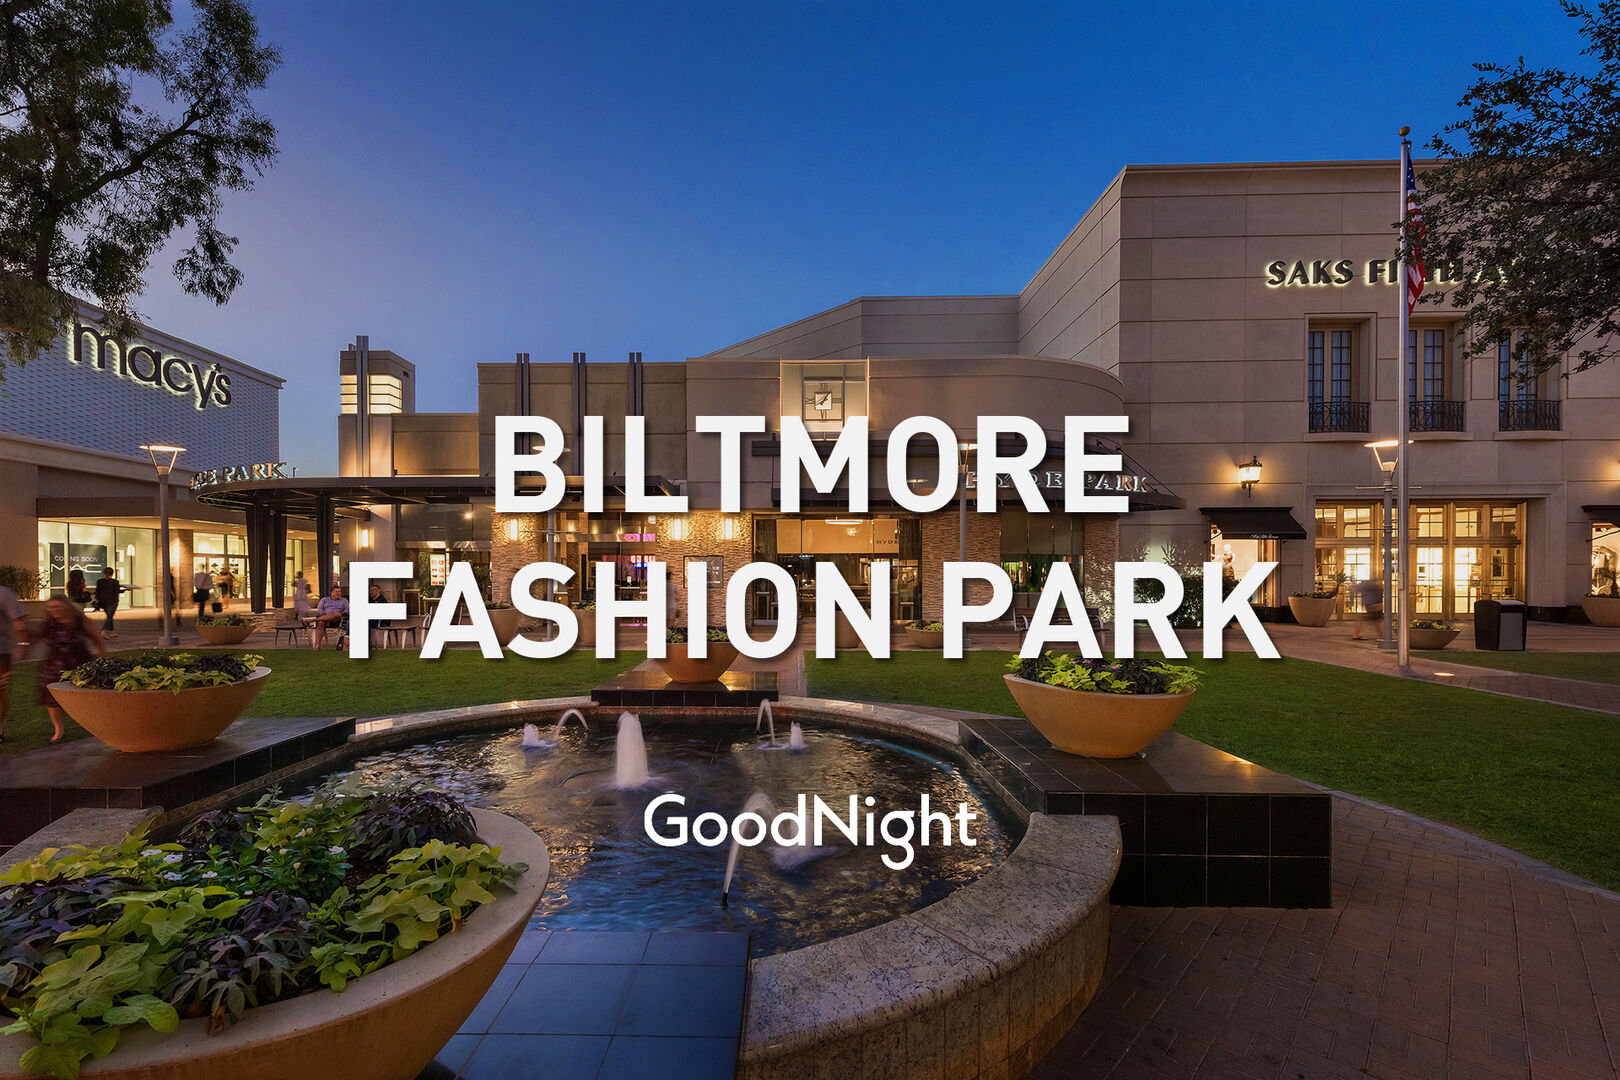 Biltmore Fashion Park: 12 mins